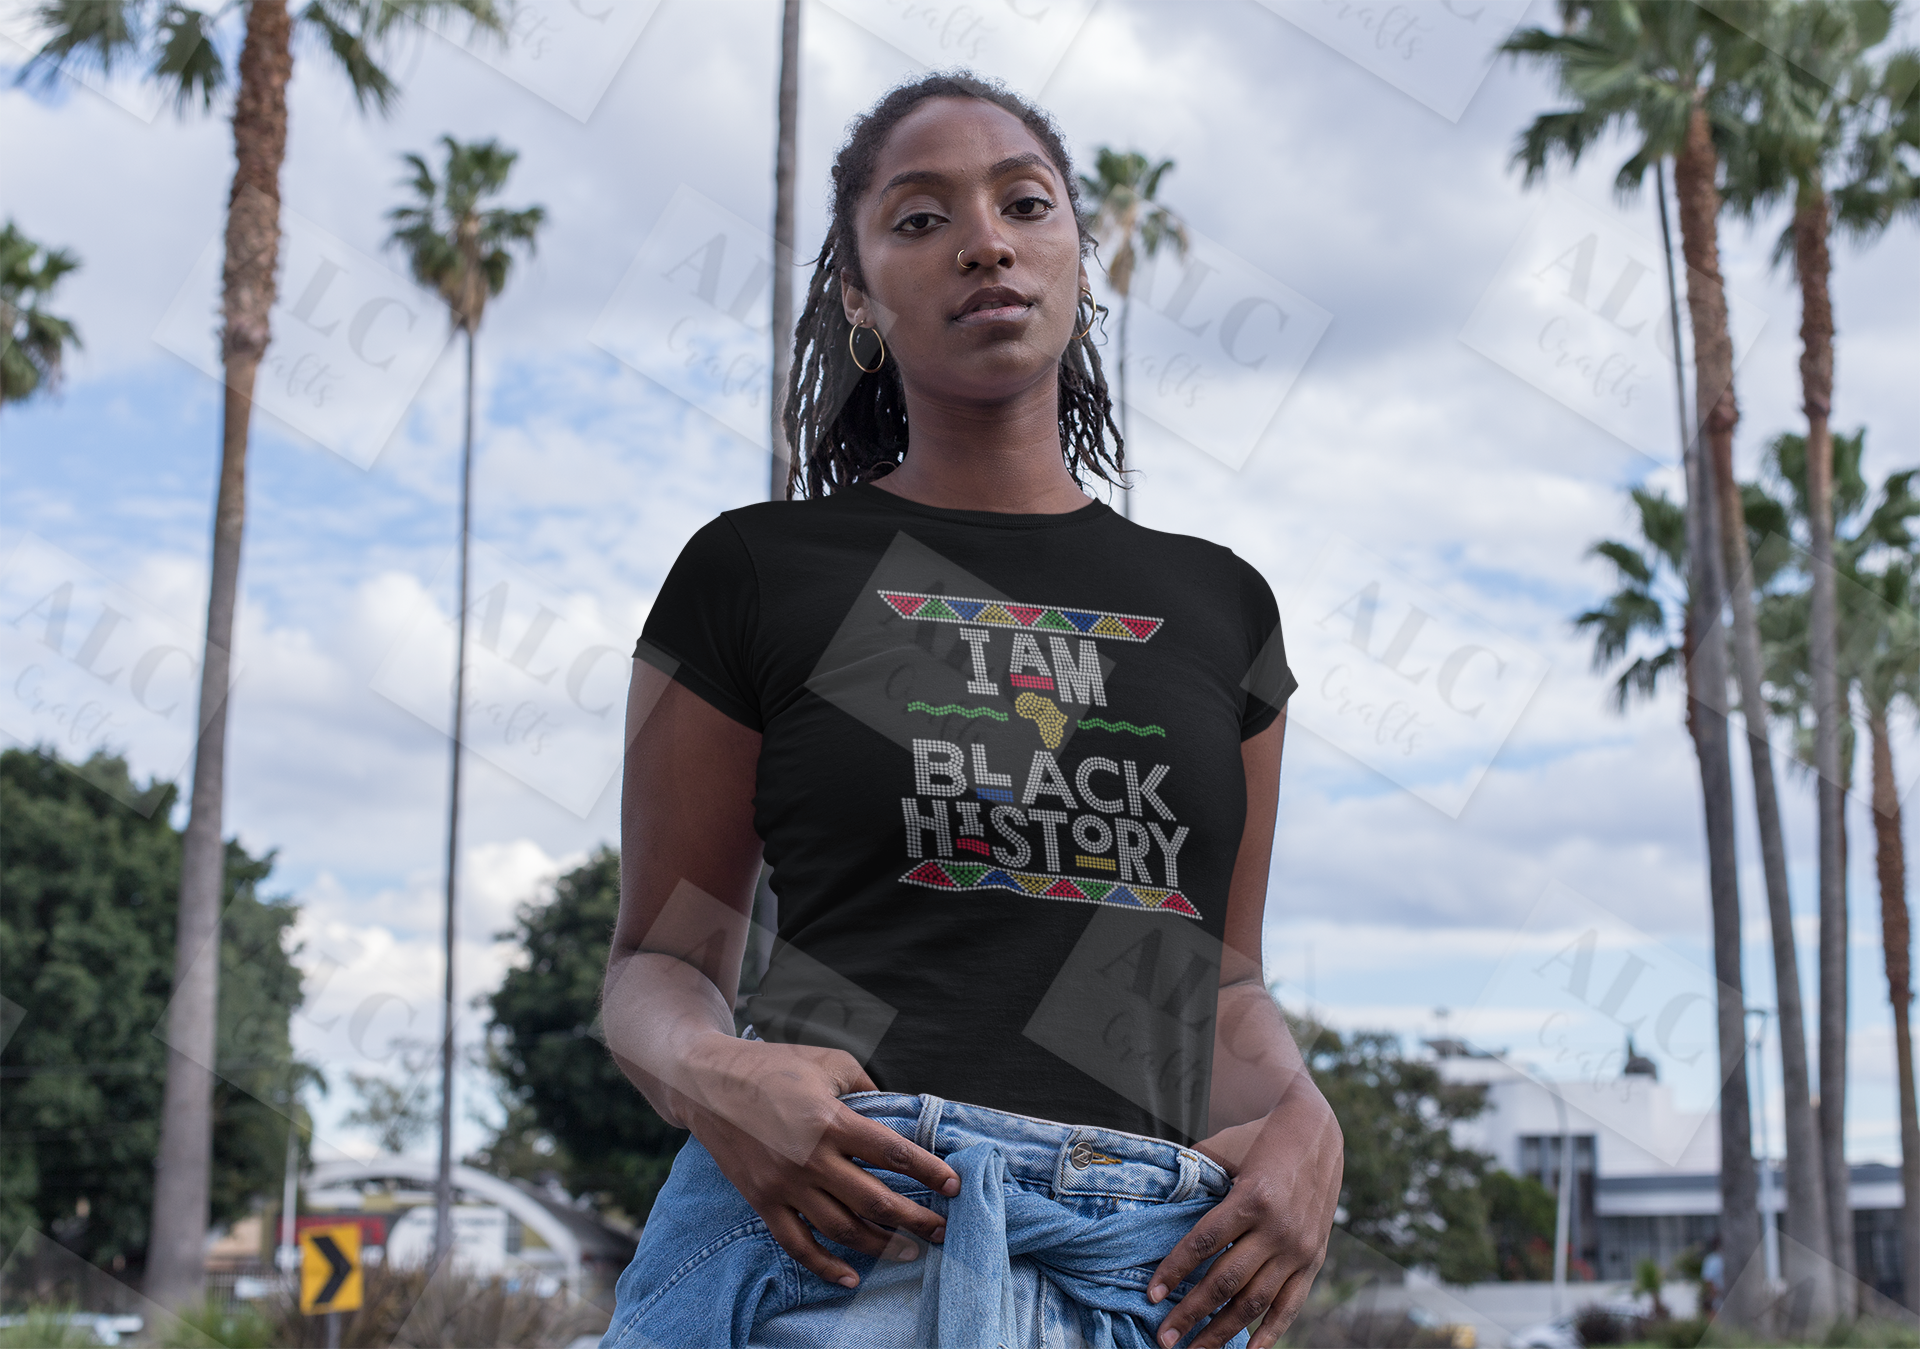 I Am Black History Rhinestone Shirt